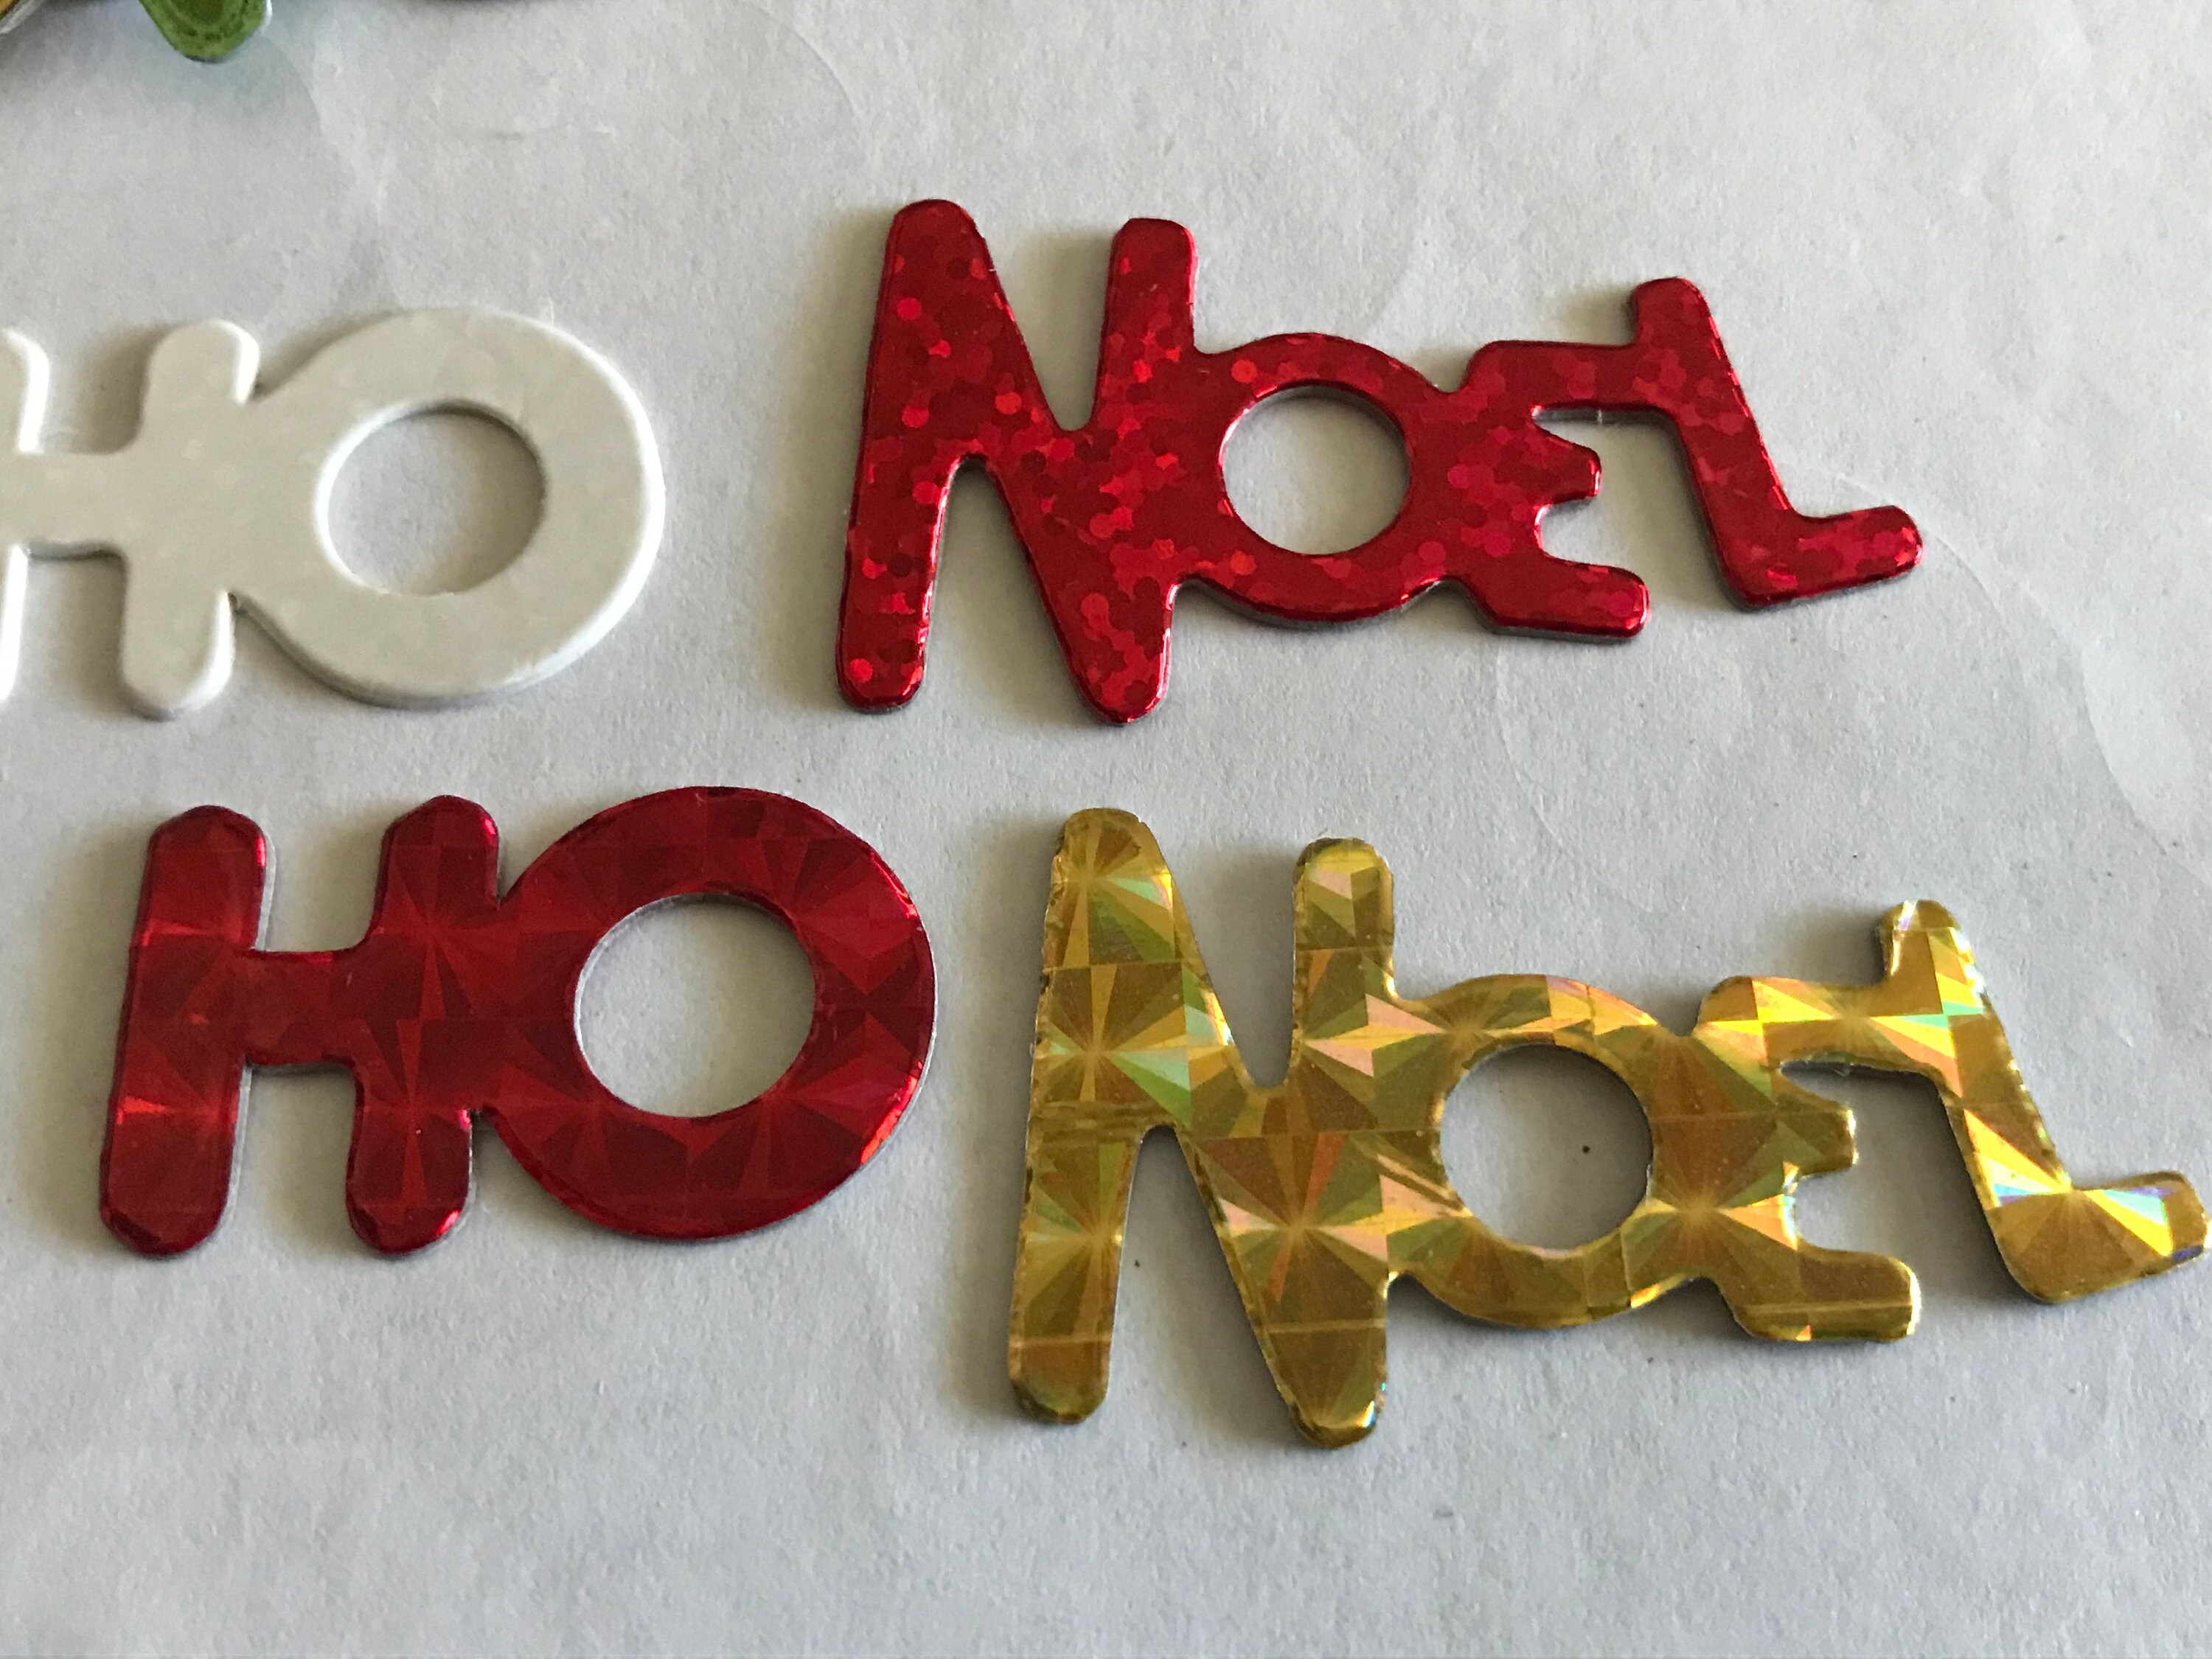 10 Count Assorted Shiny JOY, HO, NOEL Confetti Embellishments, 1 1 1/2 Inch  17 